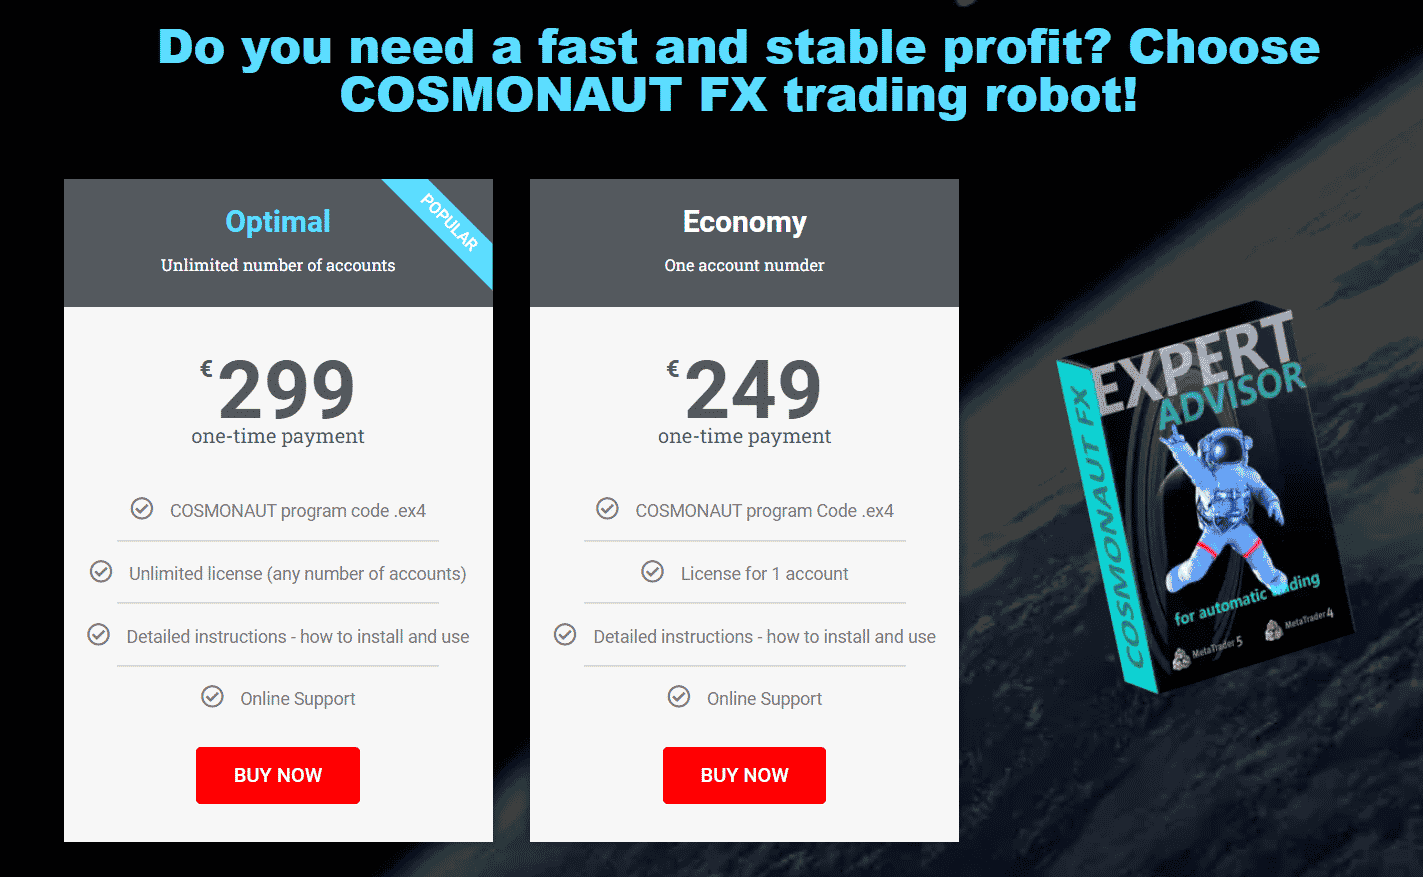 The Cosmonaut FX pricing options